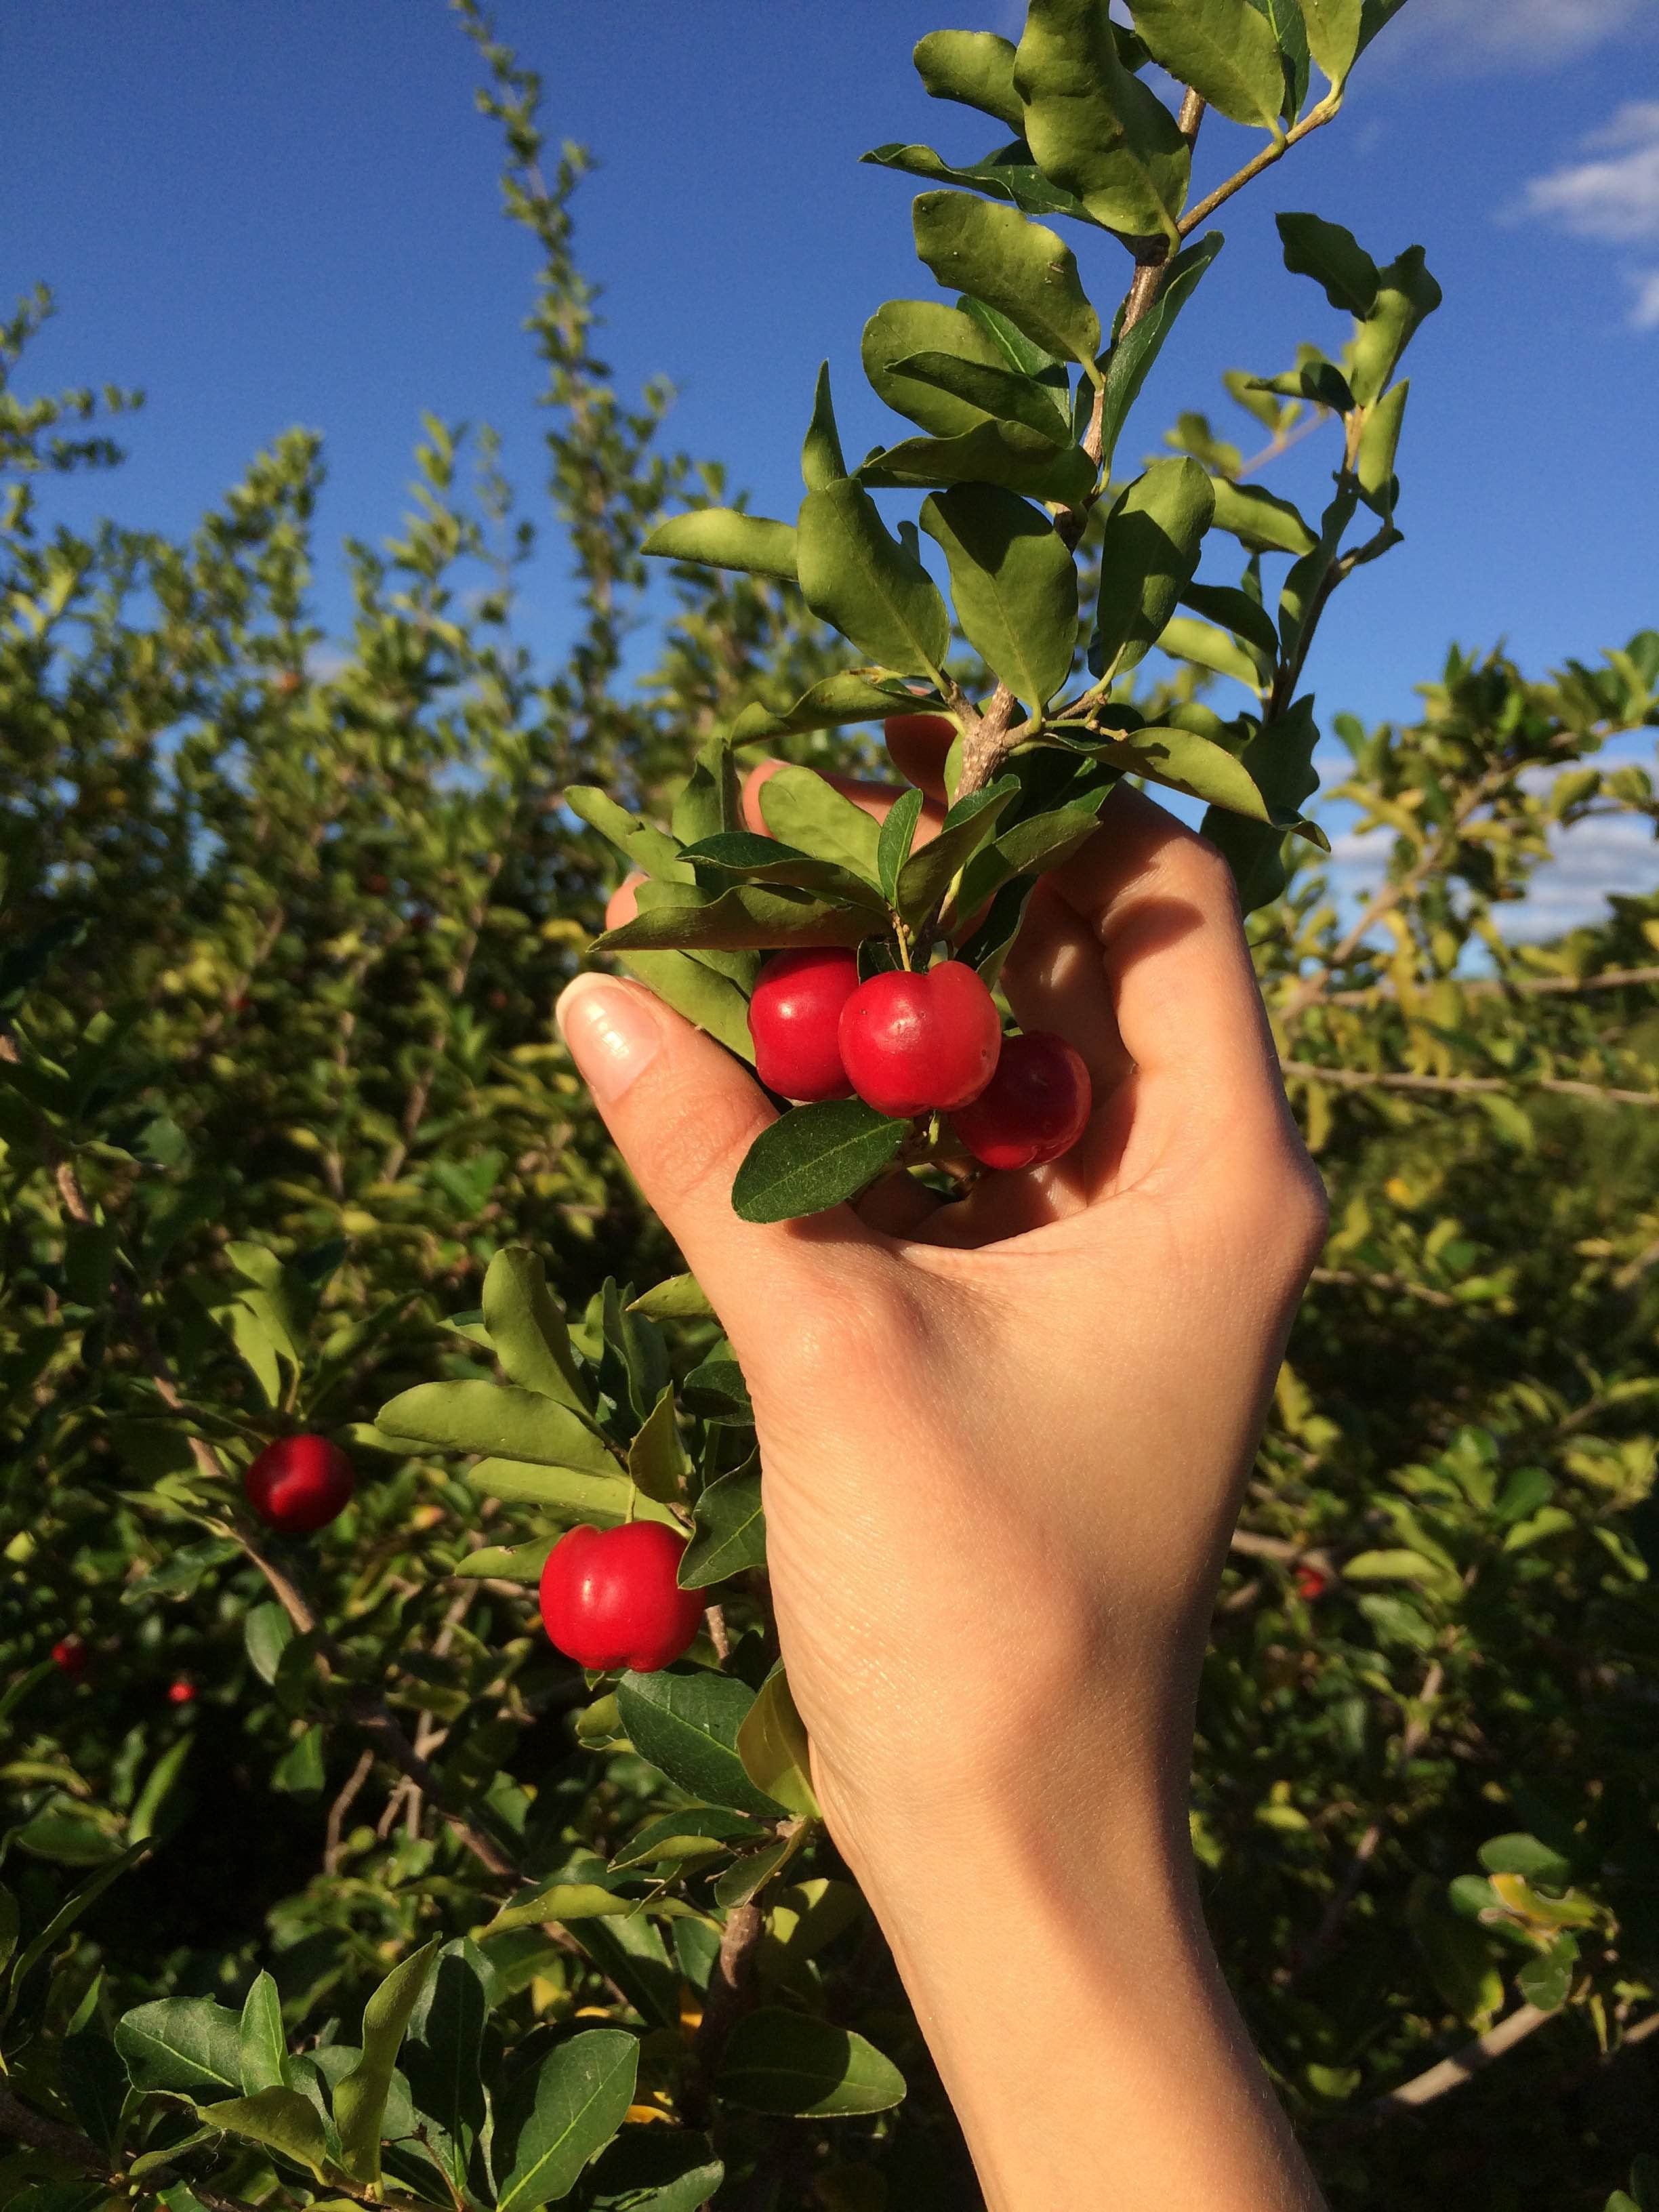 The Health Benefits of Acerola Cherry